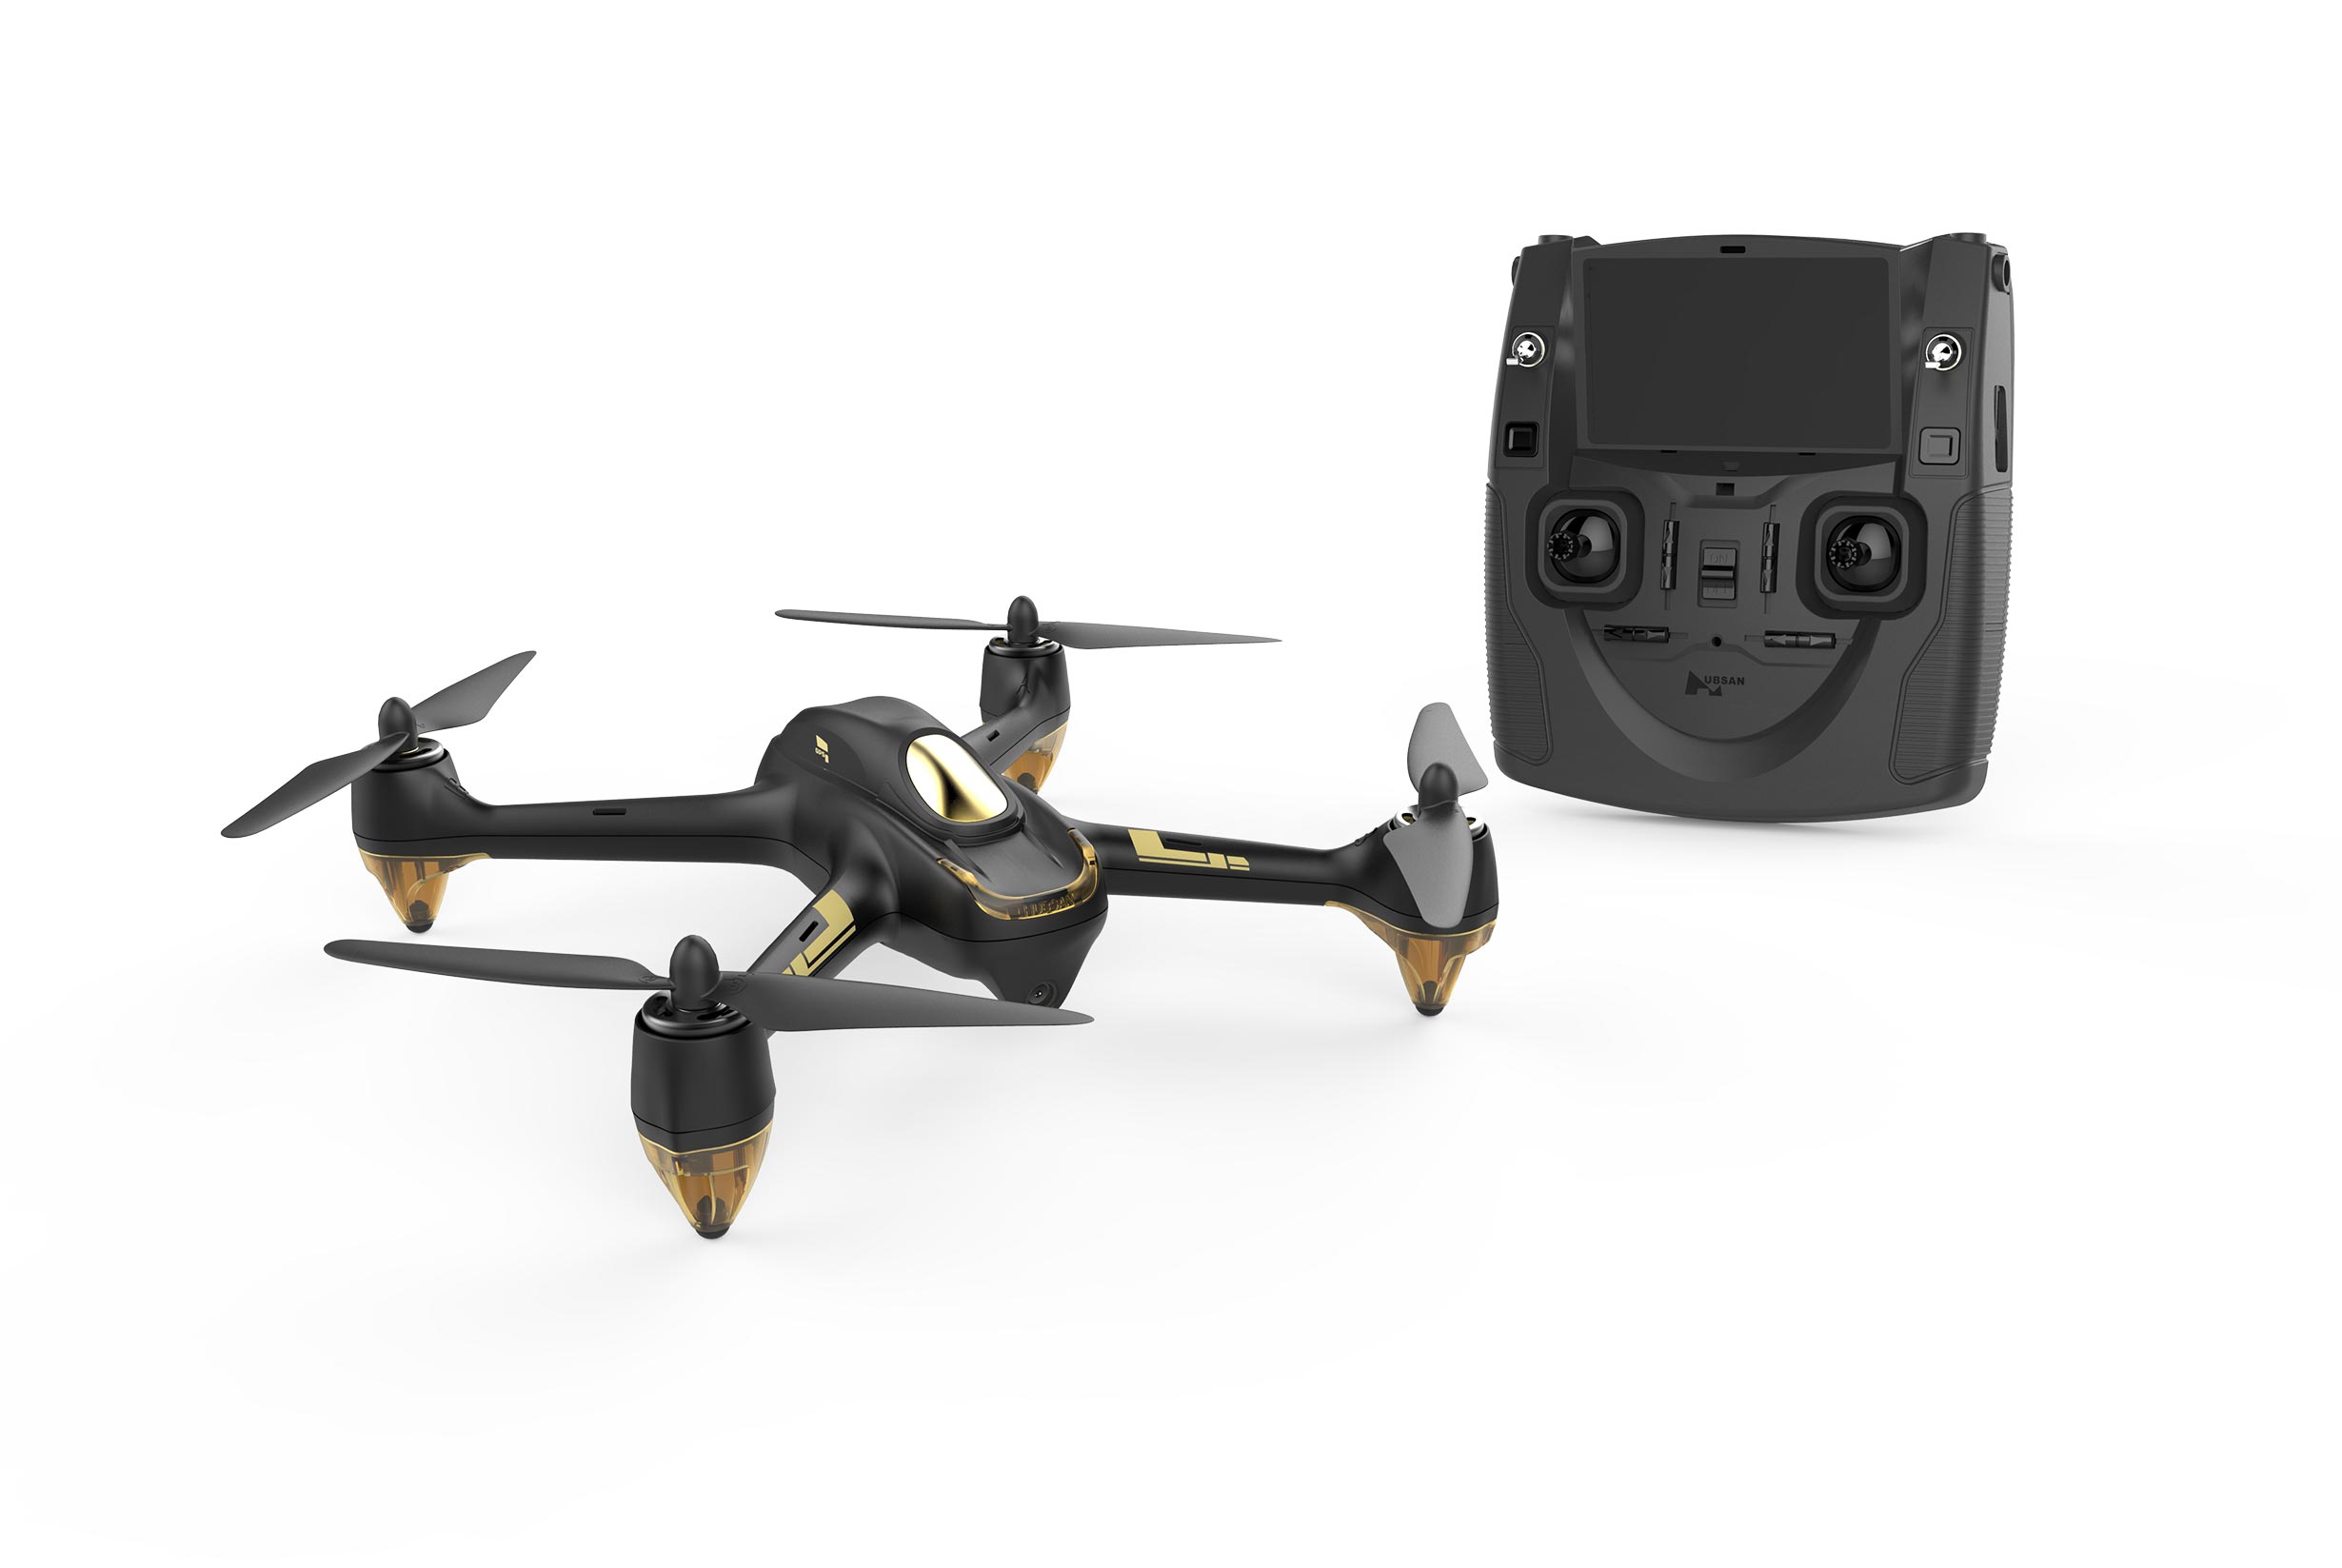 Hubsan X4 H501S Pro Drone FPV Brushless 1080P GPS Follow Me RC Quadcopter RTF UK